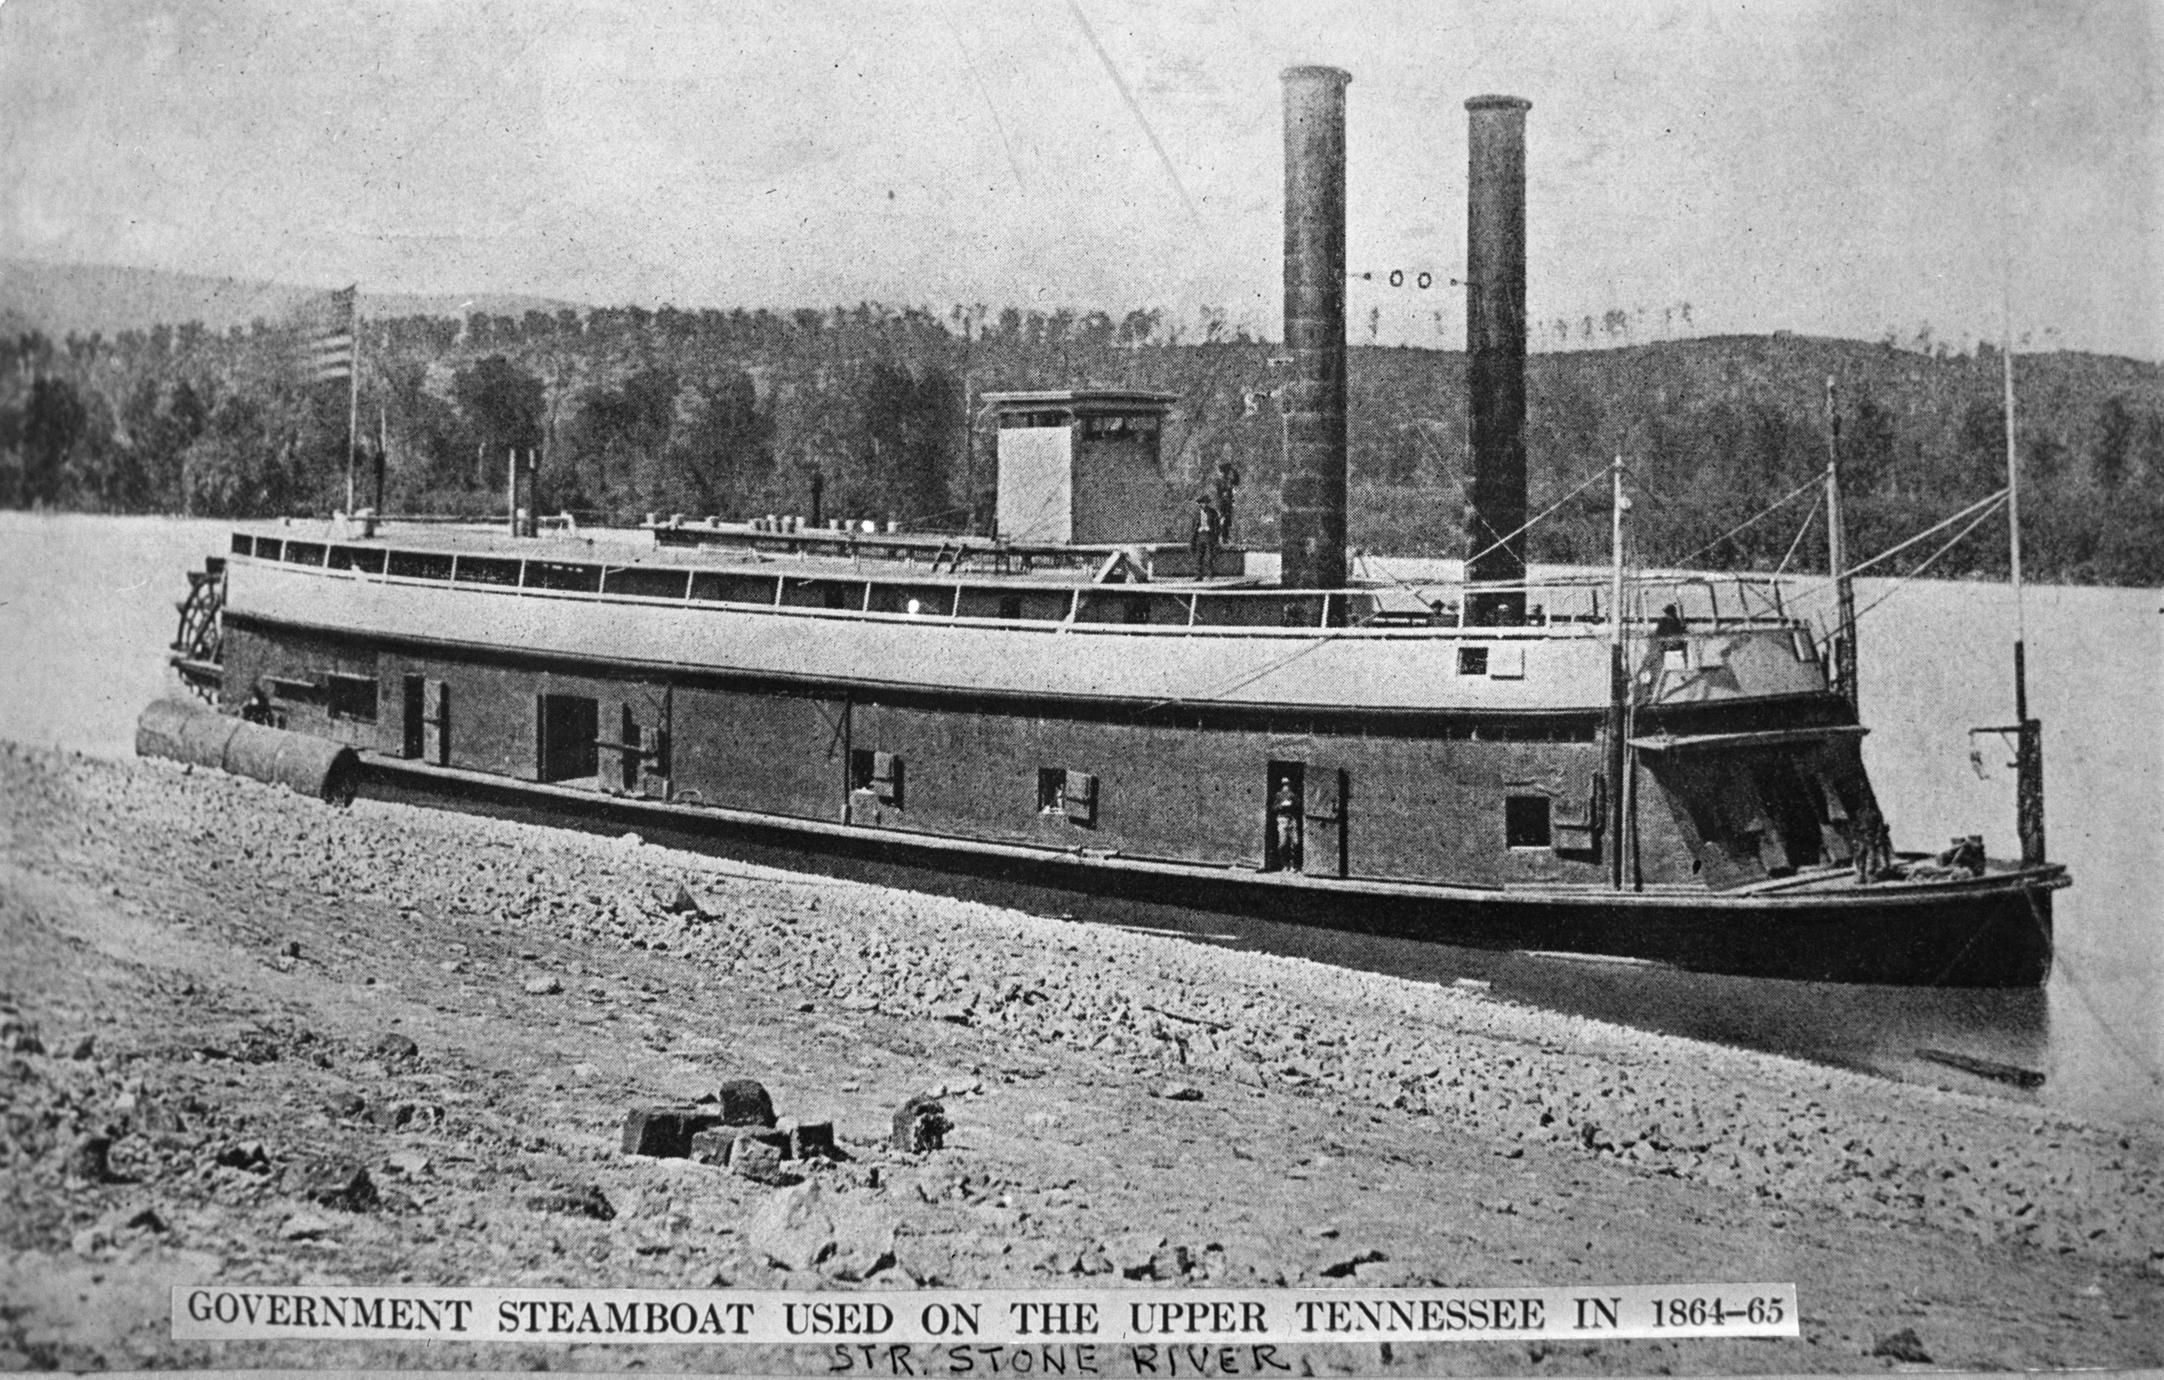 Stone River (Military boat, 1864-65)